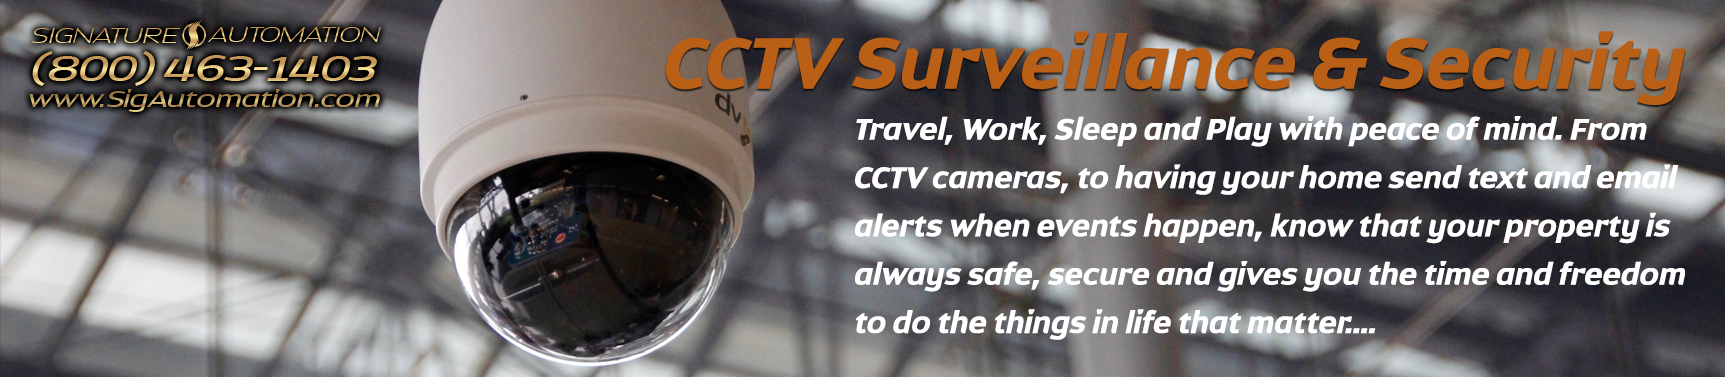 cctv_surveillance.png